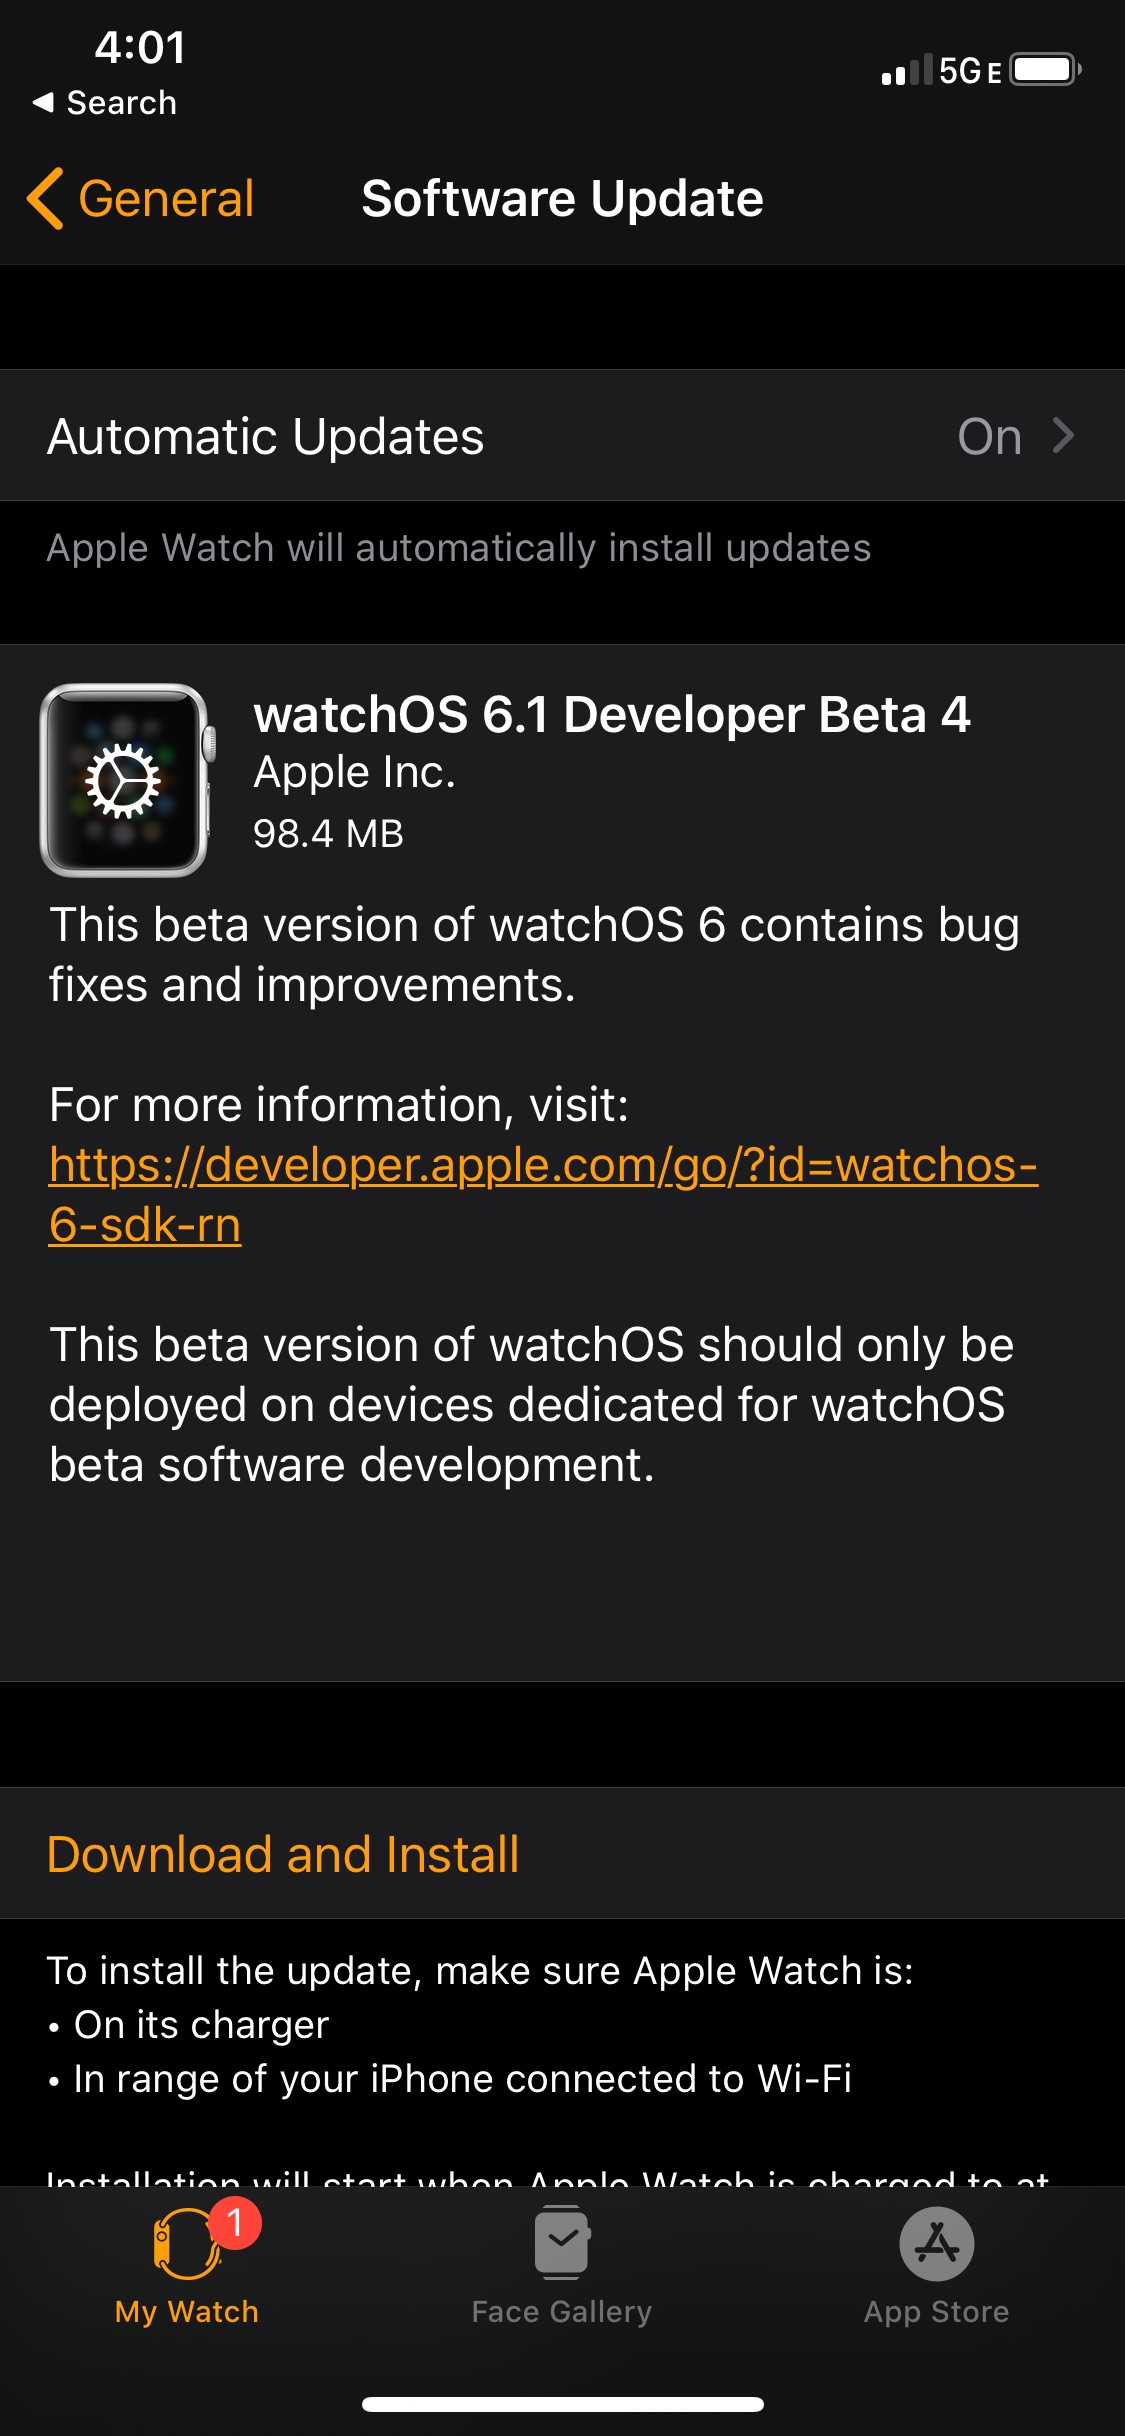 Apple Seeds watchOS 6.1 Beta 4 to Developers [Download]